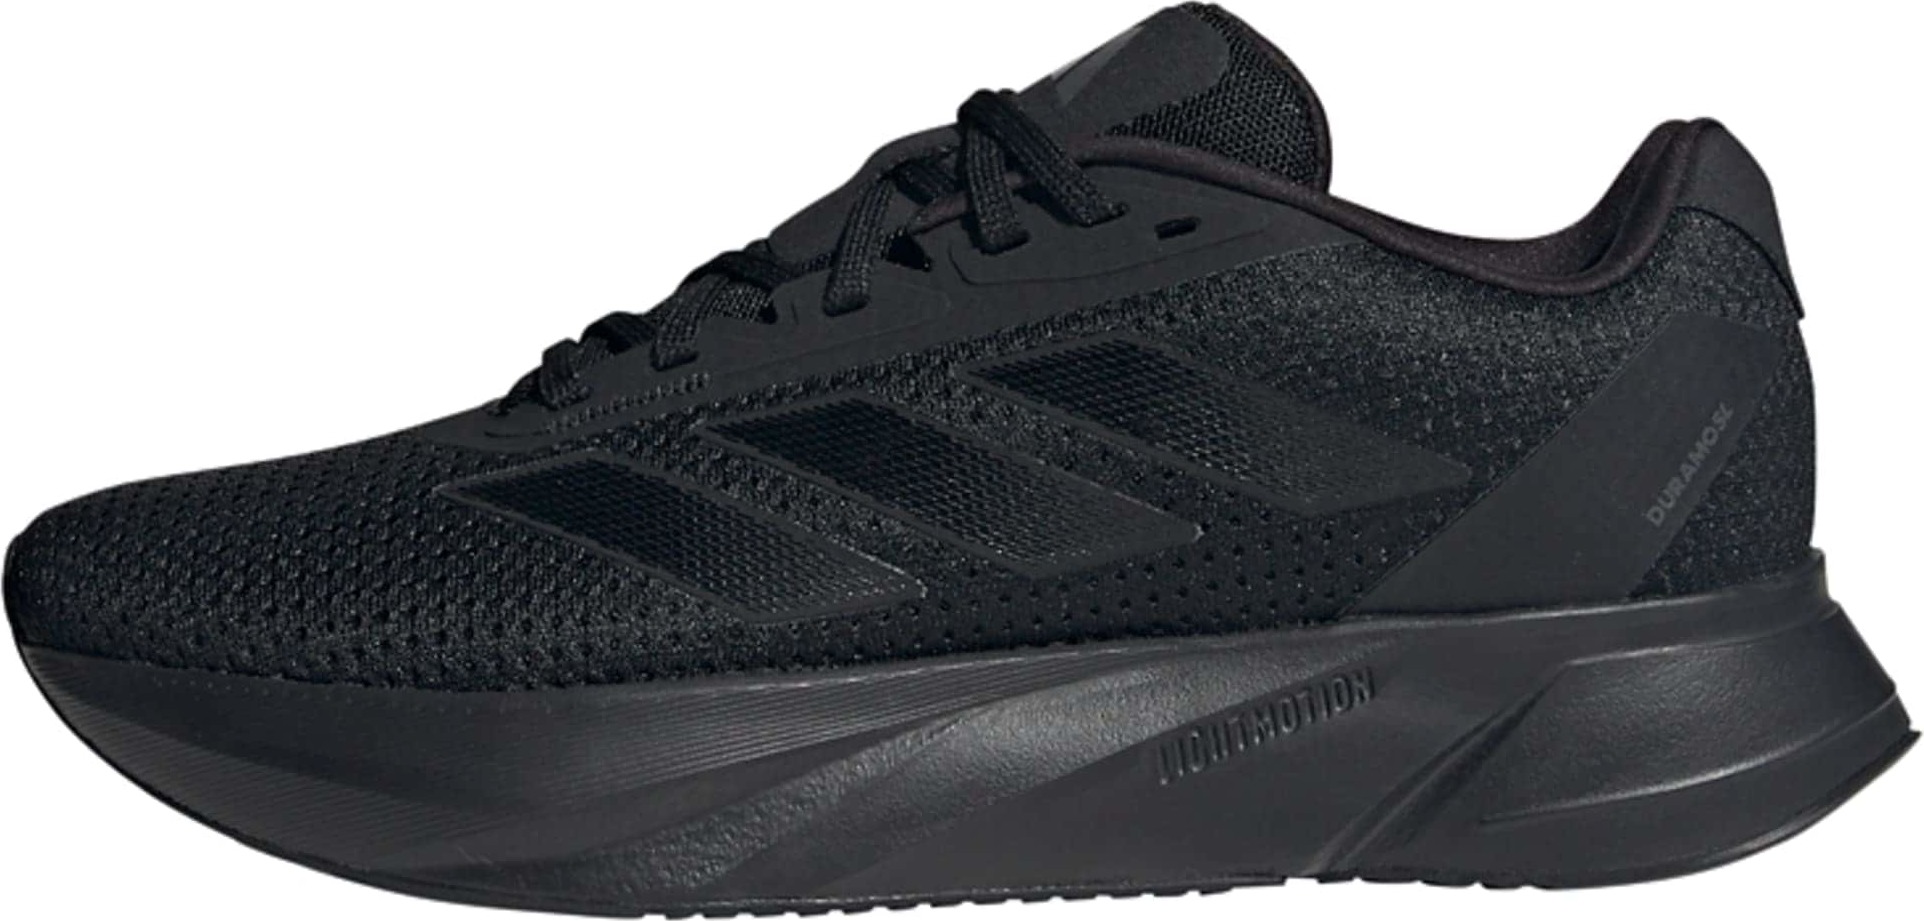 Běžecká obuv 'Duramo Sl' adidas performance černá